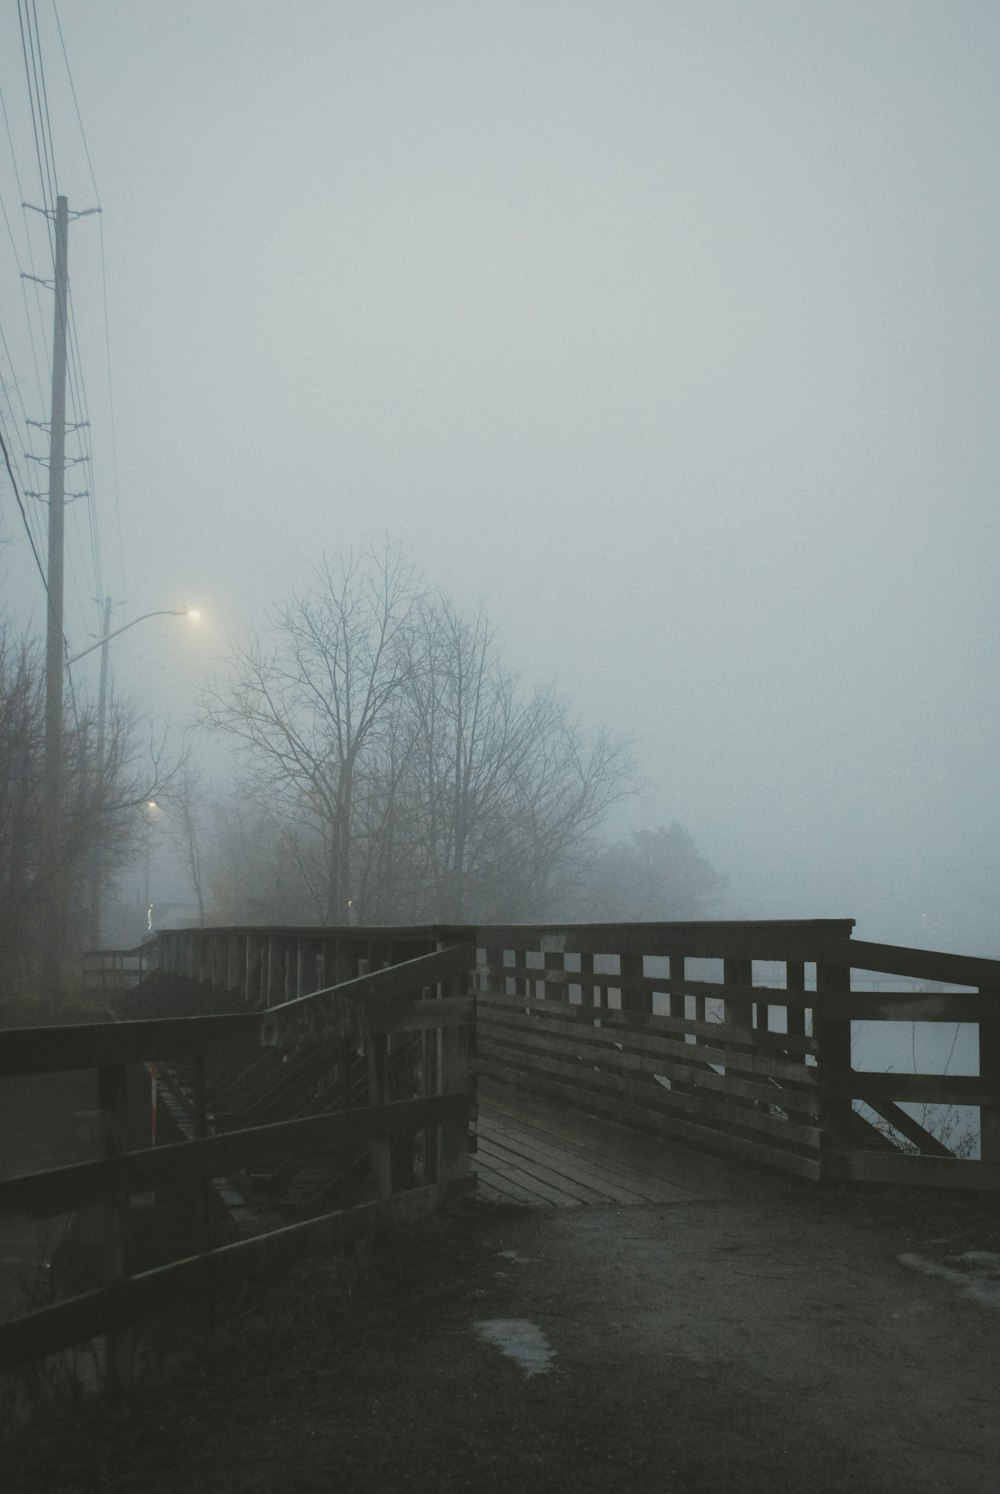 a foggy day on a bridge over a river